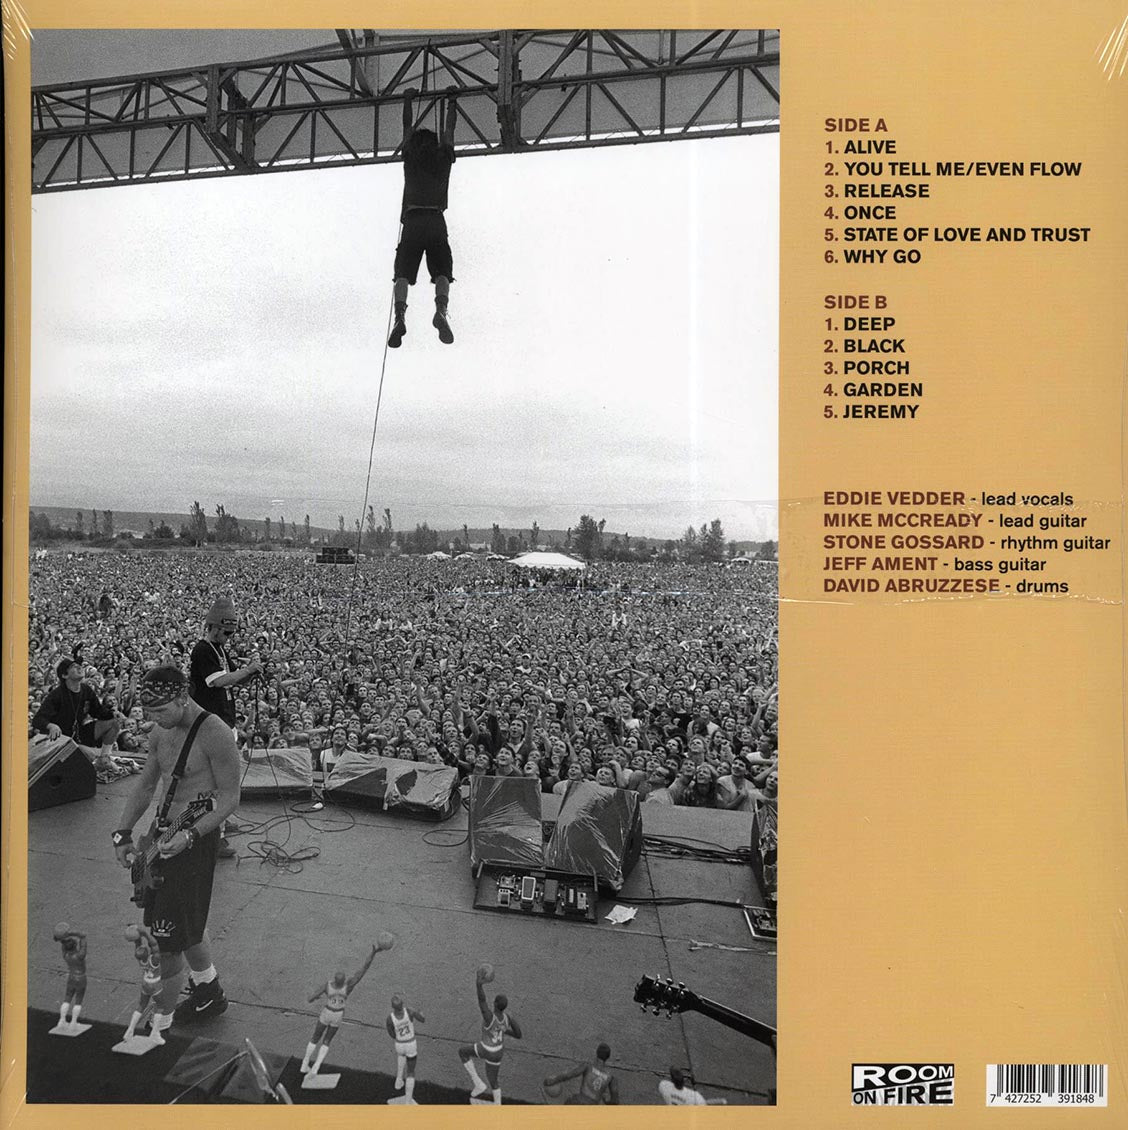 Pearl Jam - Deep: Live In Chicago, March 28, 1992 (ltd. 500 copies made) (yellow vinyl) - Vinyl LP, LP